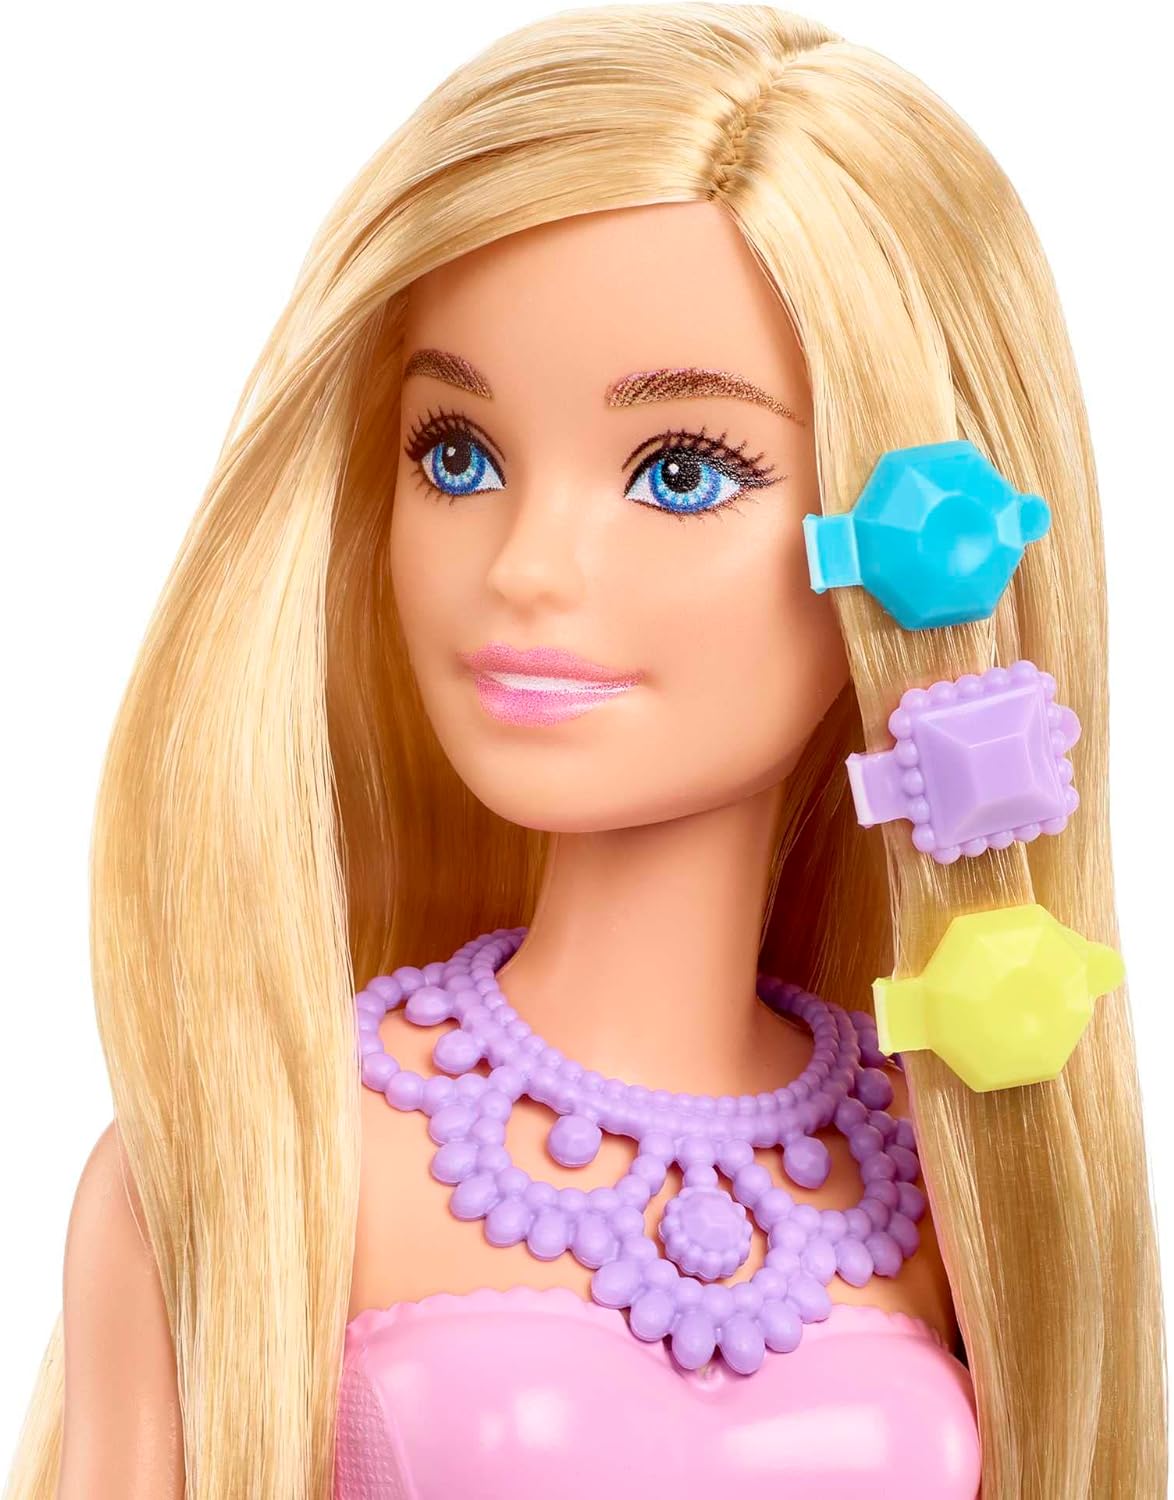 Barbie Dreamtopia Advent Calendar with Barbie Doll and 24 Surprises